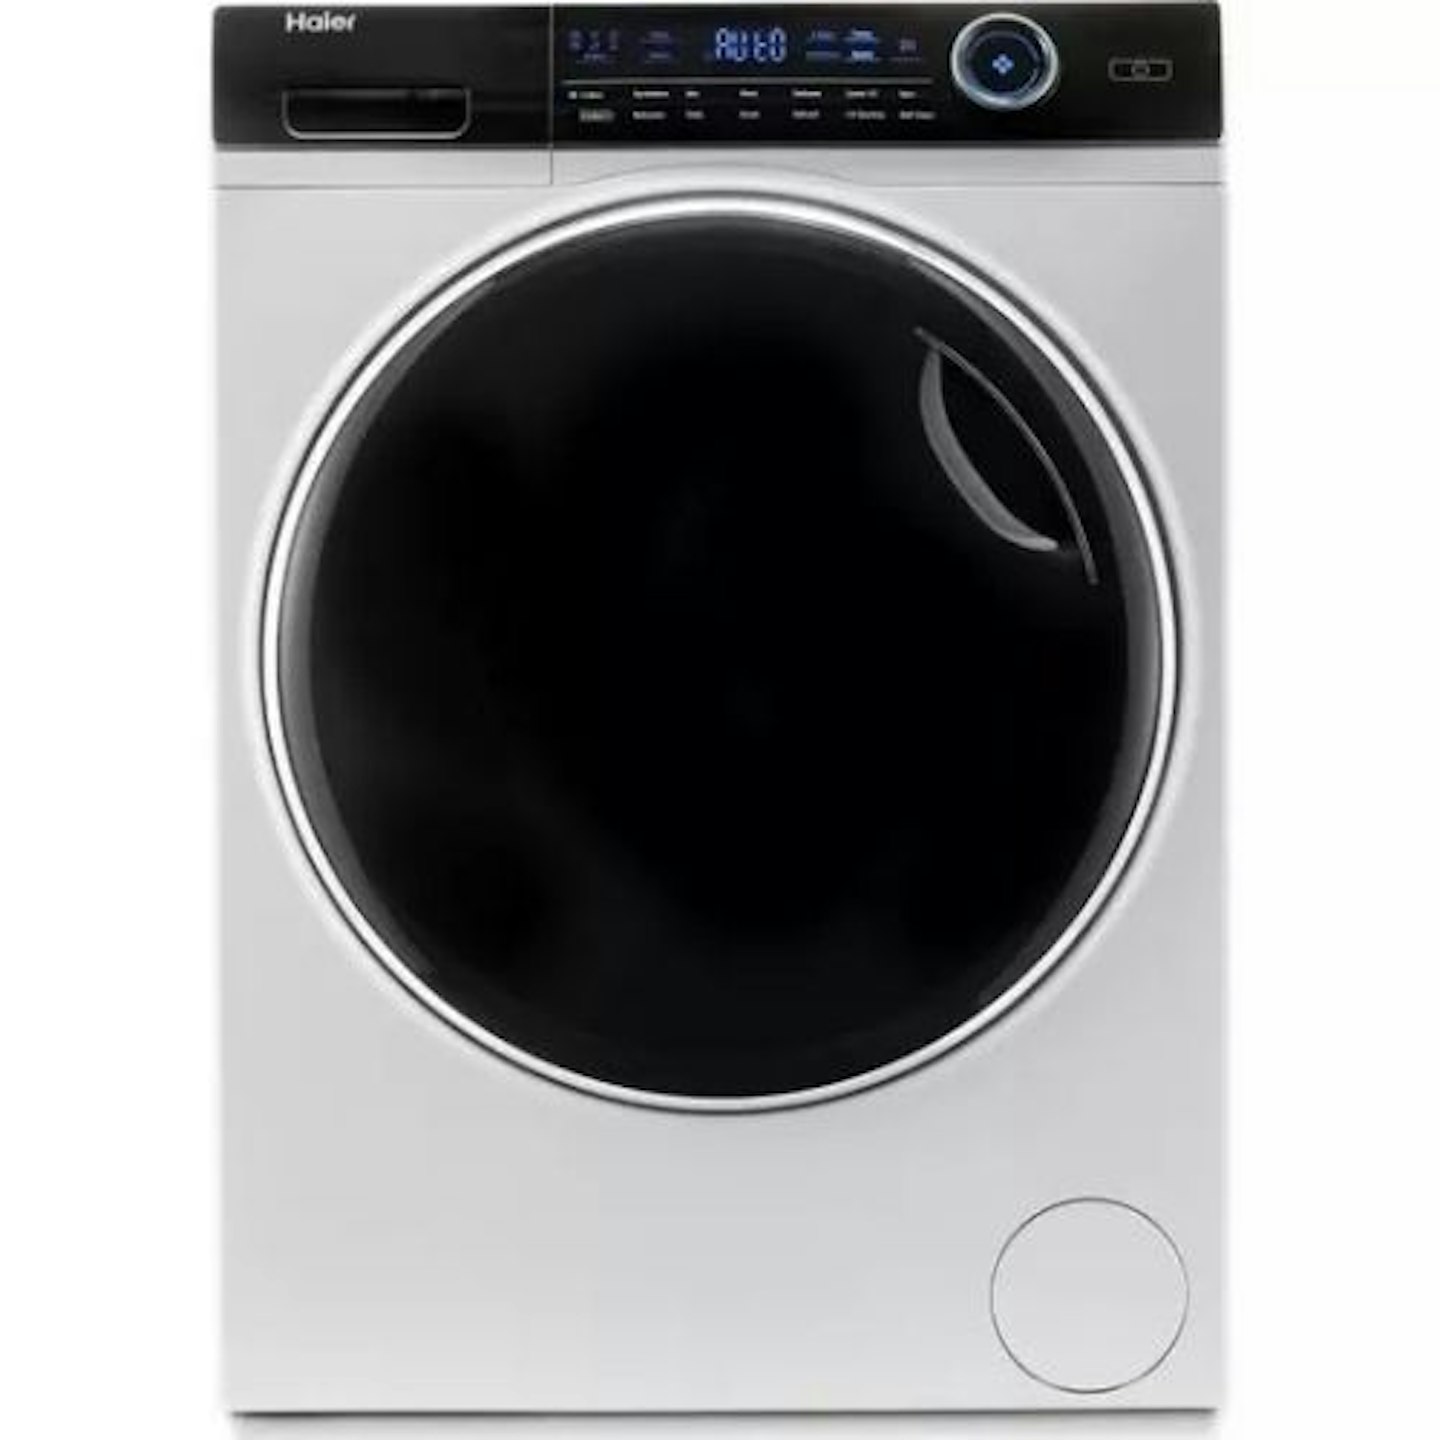 HAIER I-Pro Series 7 HW100-B14979 10 kg 1400 Spin Washing Machine